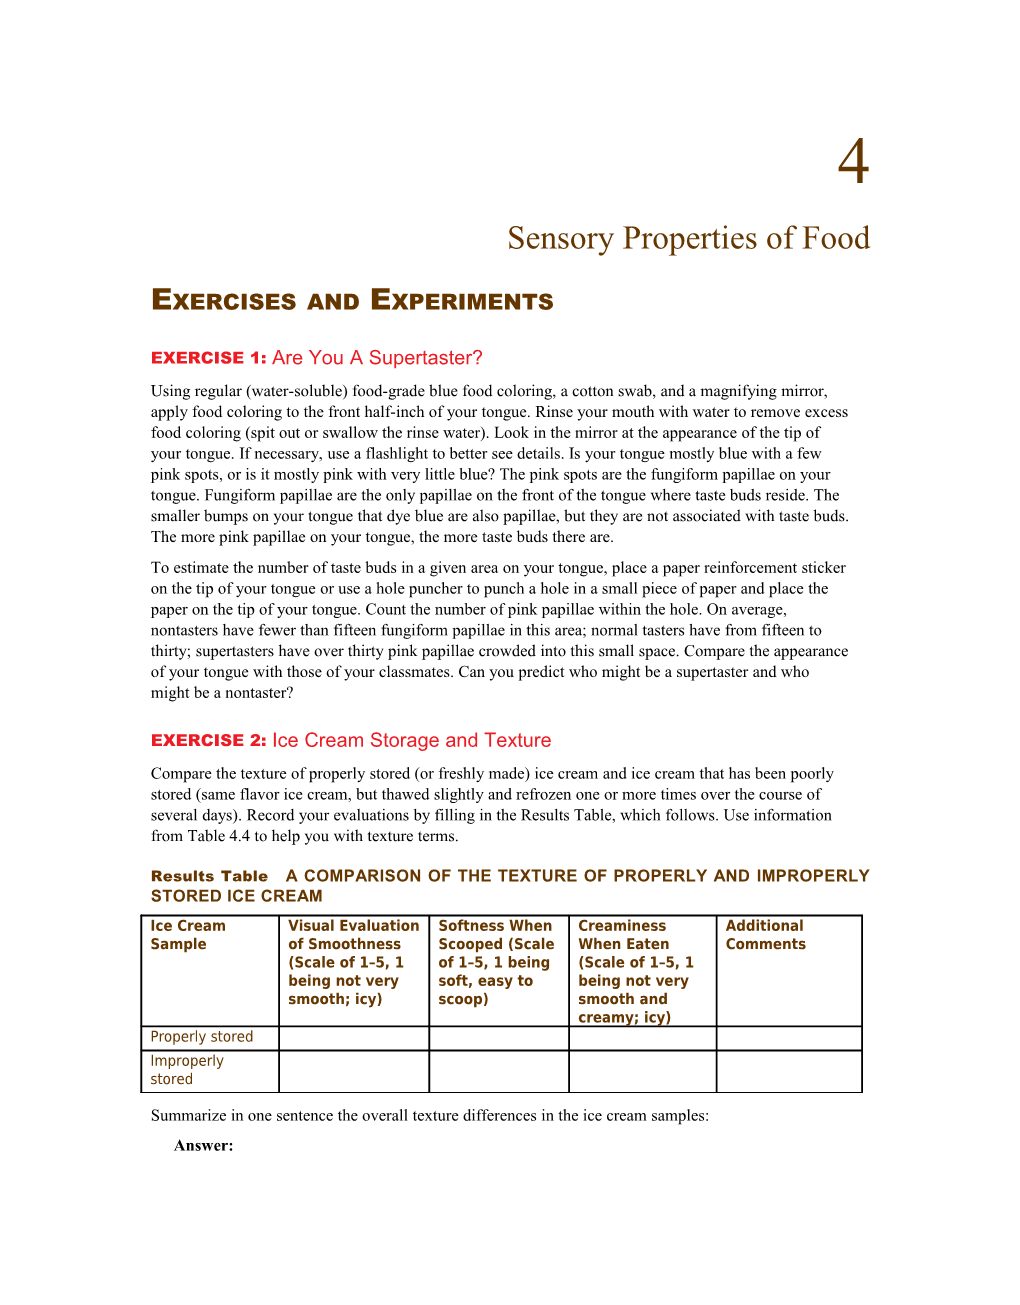 Sensory Properties of Food